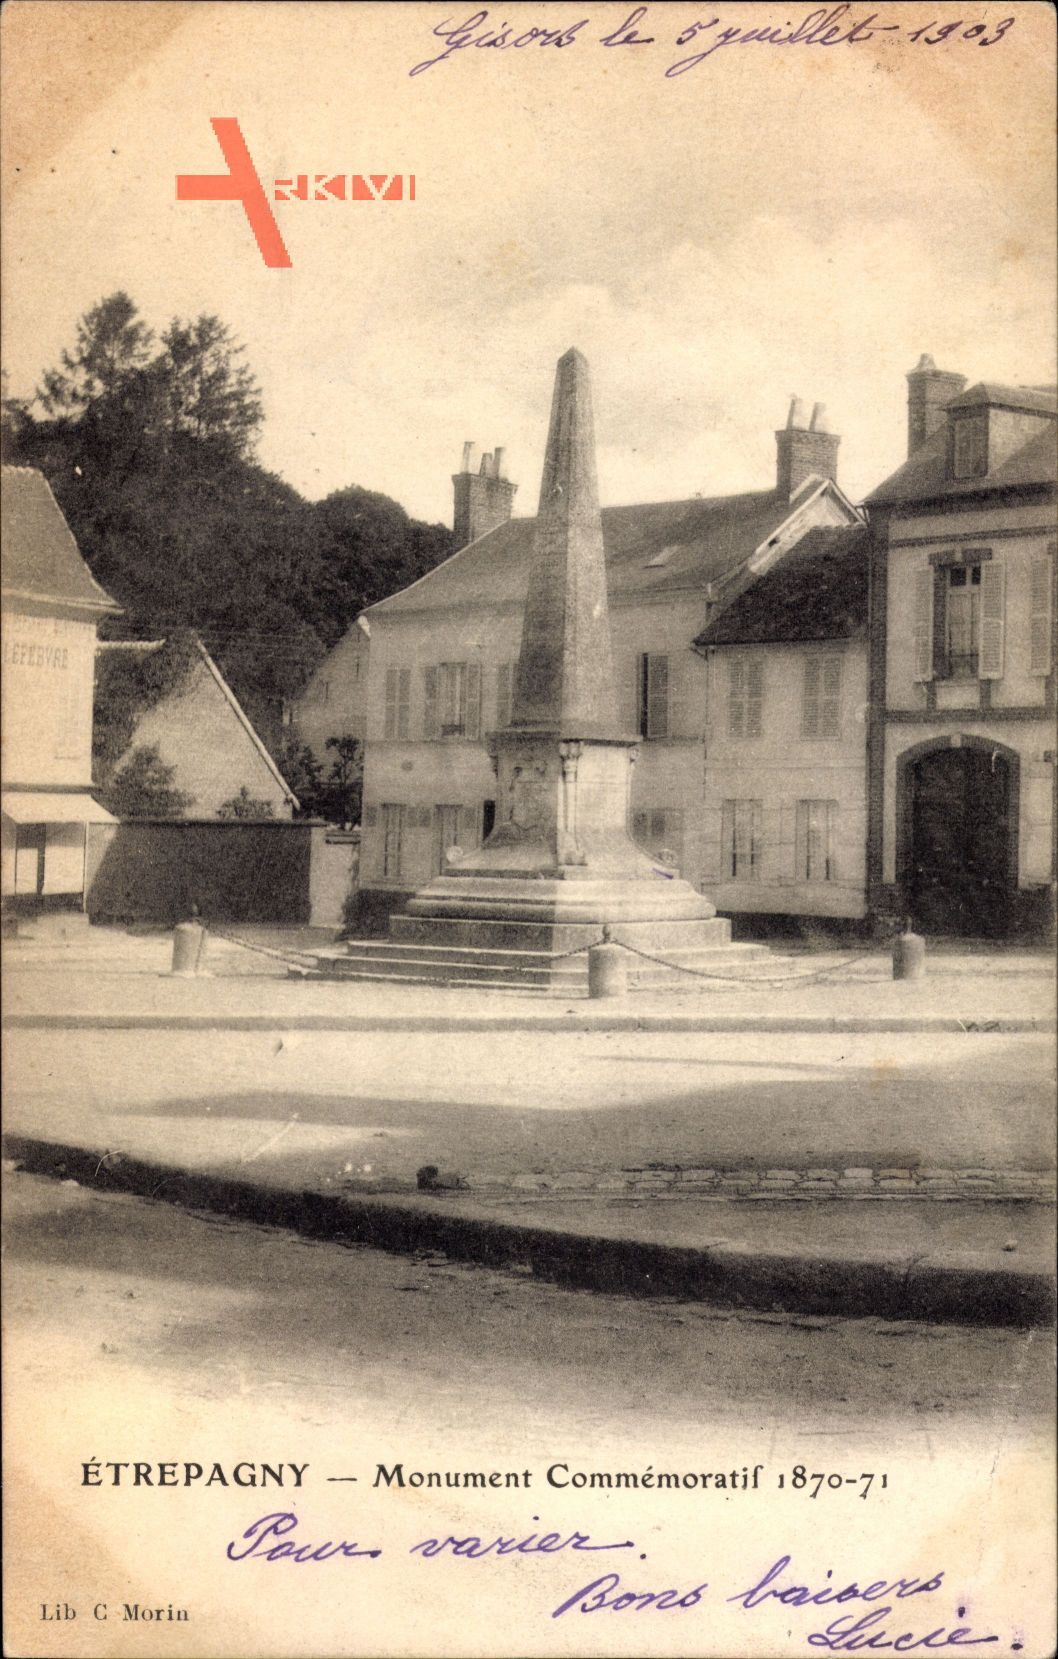 Etrepagny Eure, Monument Commemoratif 1870 à 1871, Obelisk, Denkmal